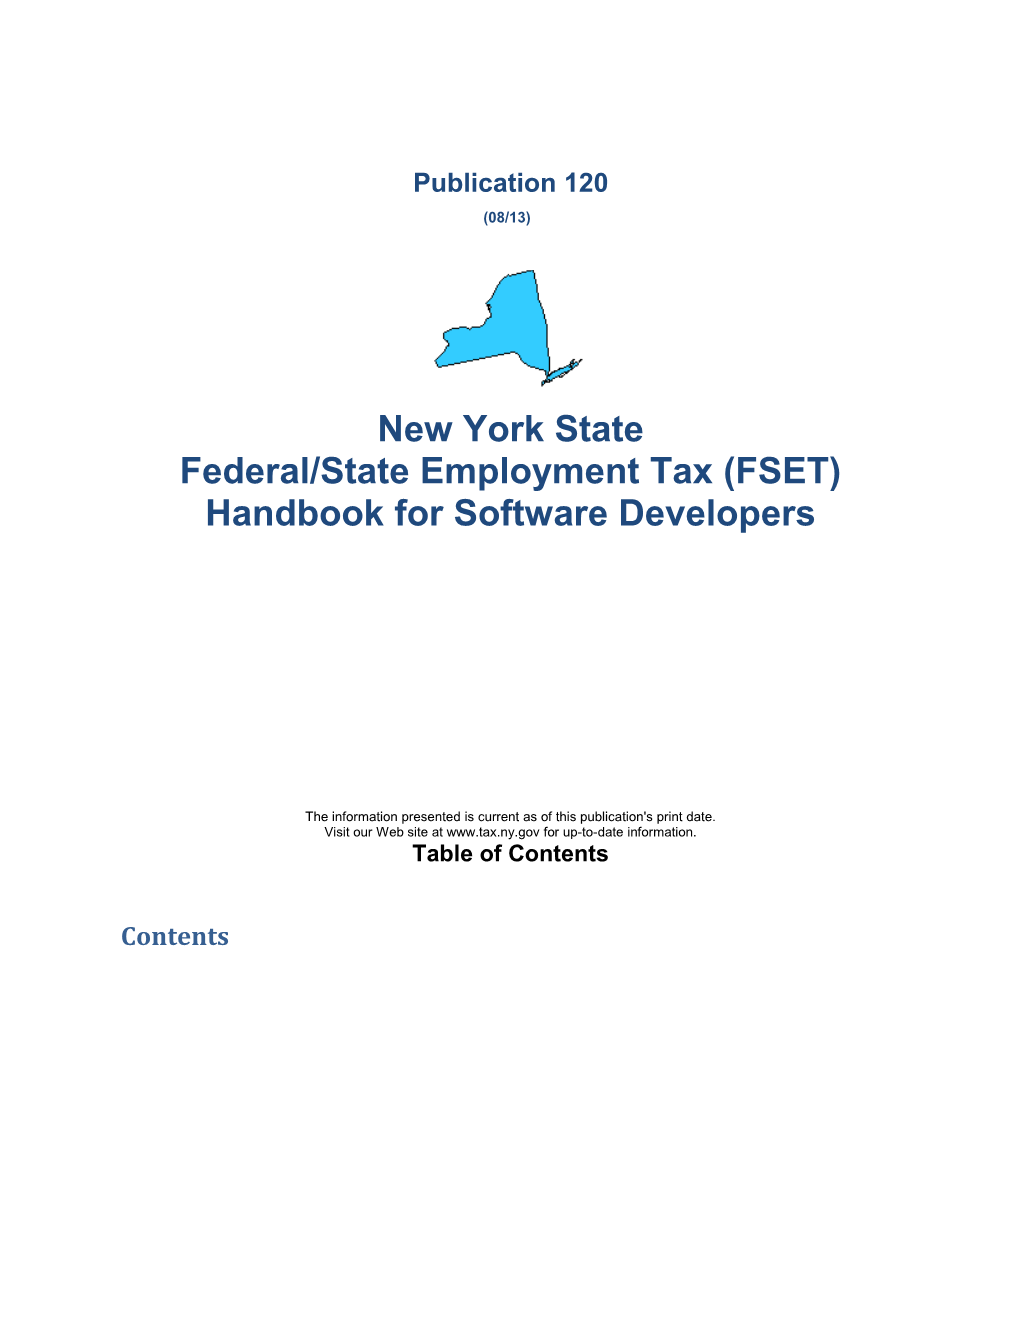 Federal/State Employment Tax (FSET)